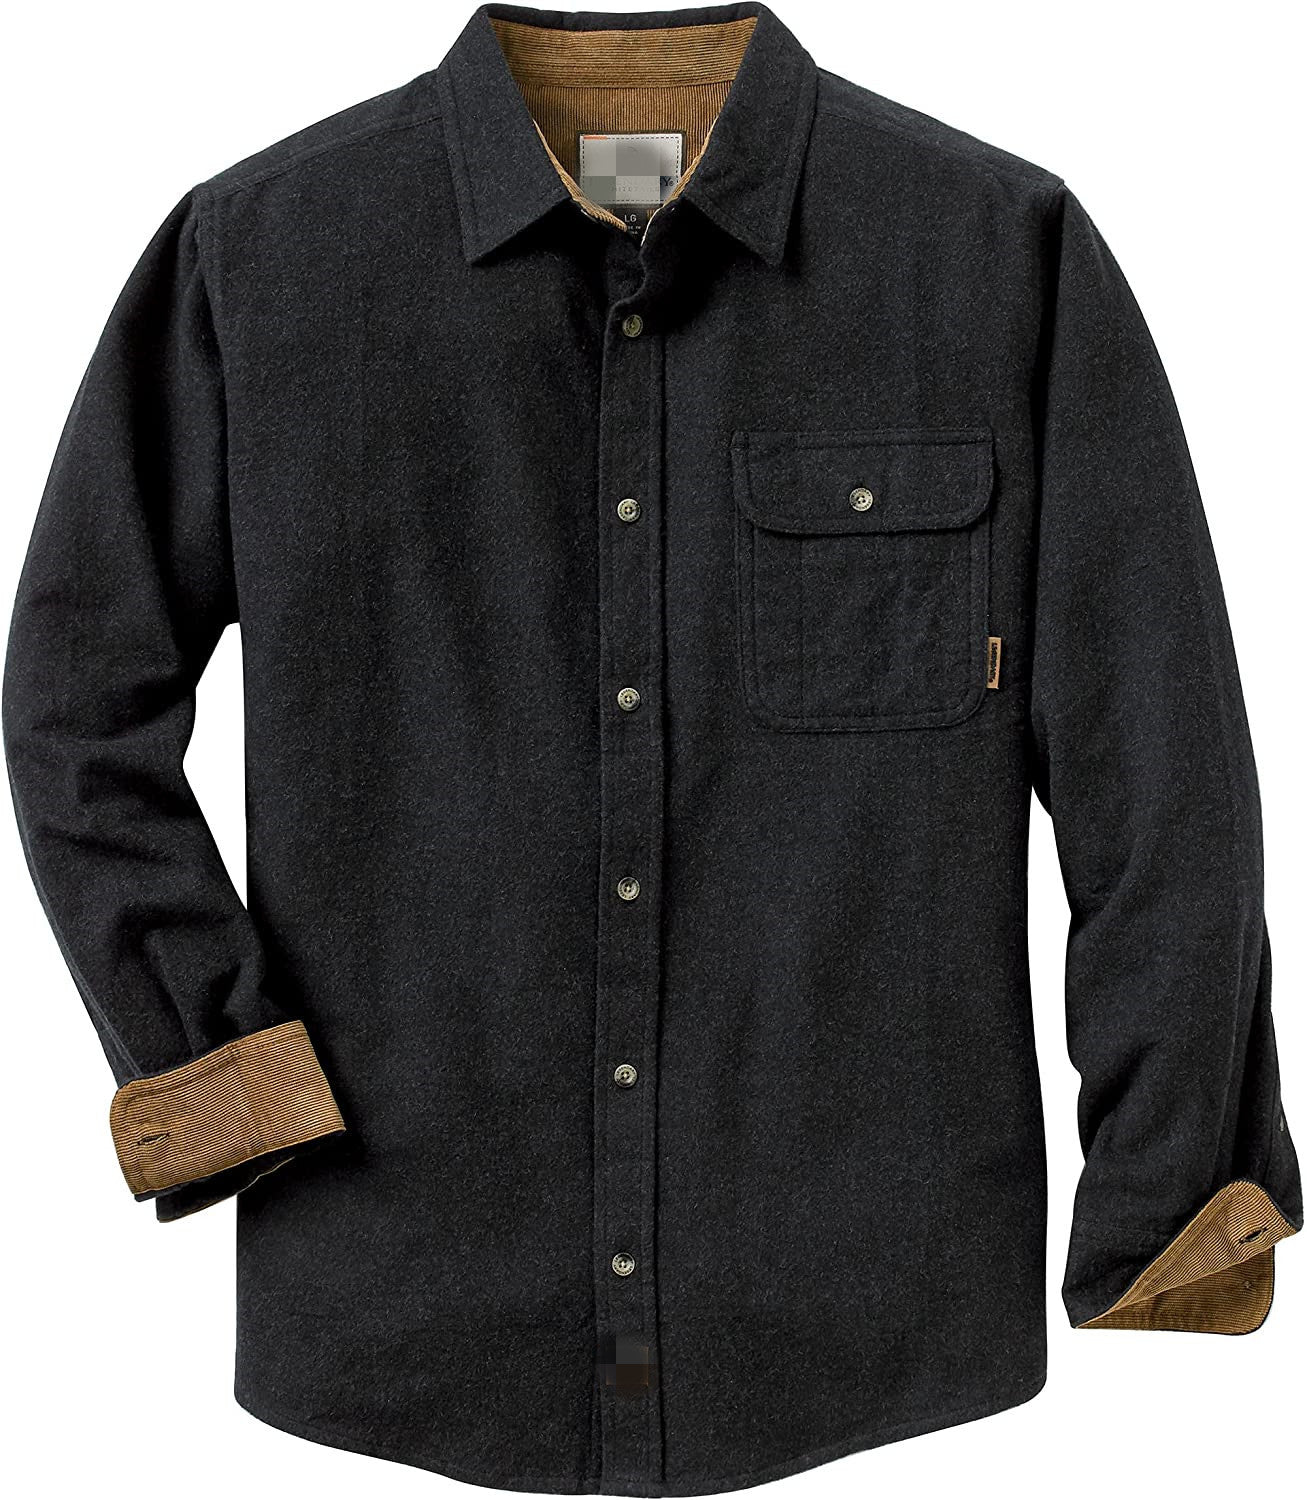 Casual Long Sleeves Shirts for Men-Shirts & Tops-Black-S-Free Shipping at meselling99